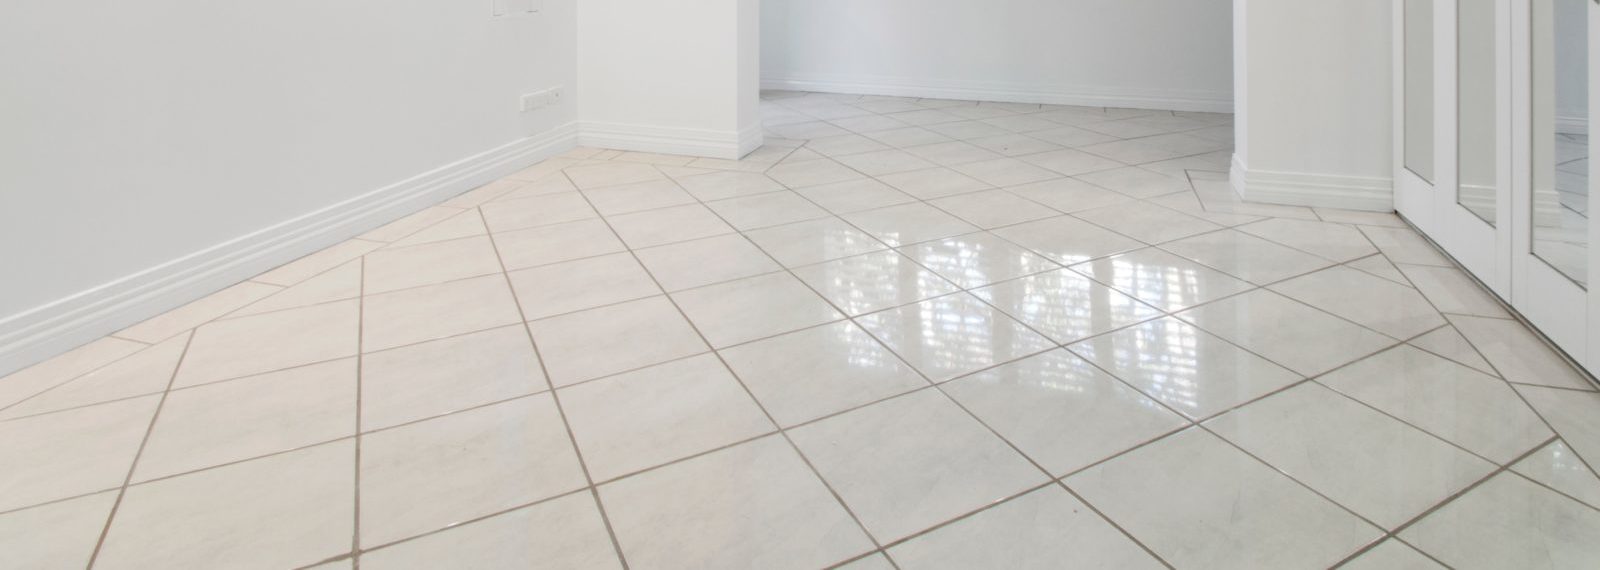 Clean tile floor